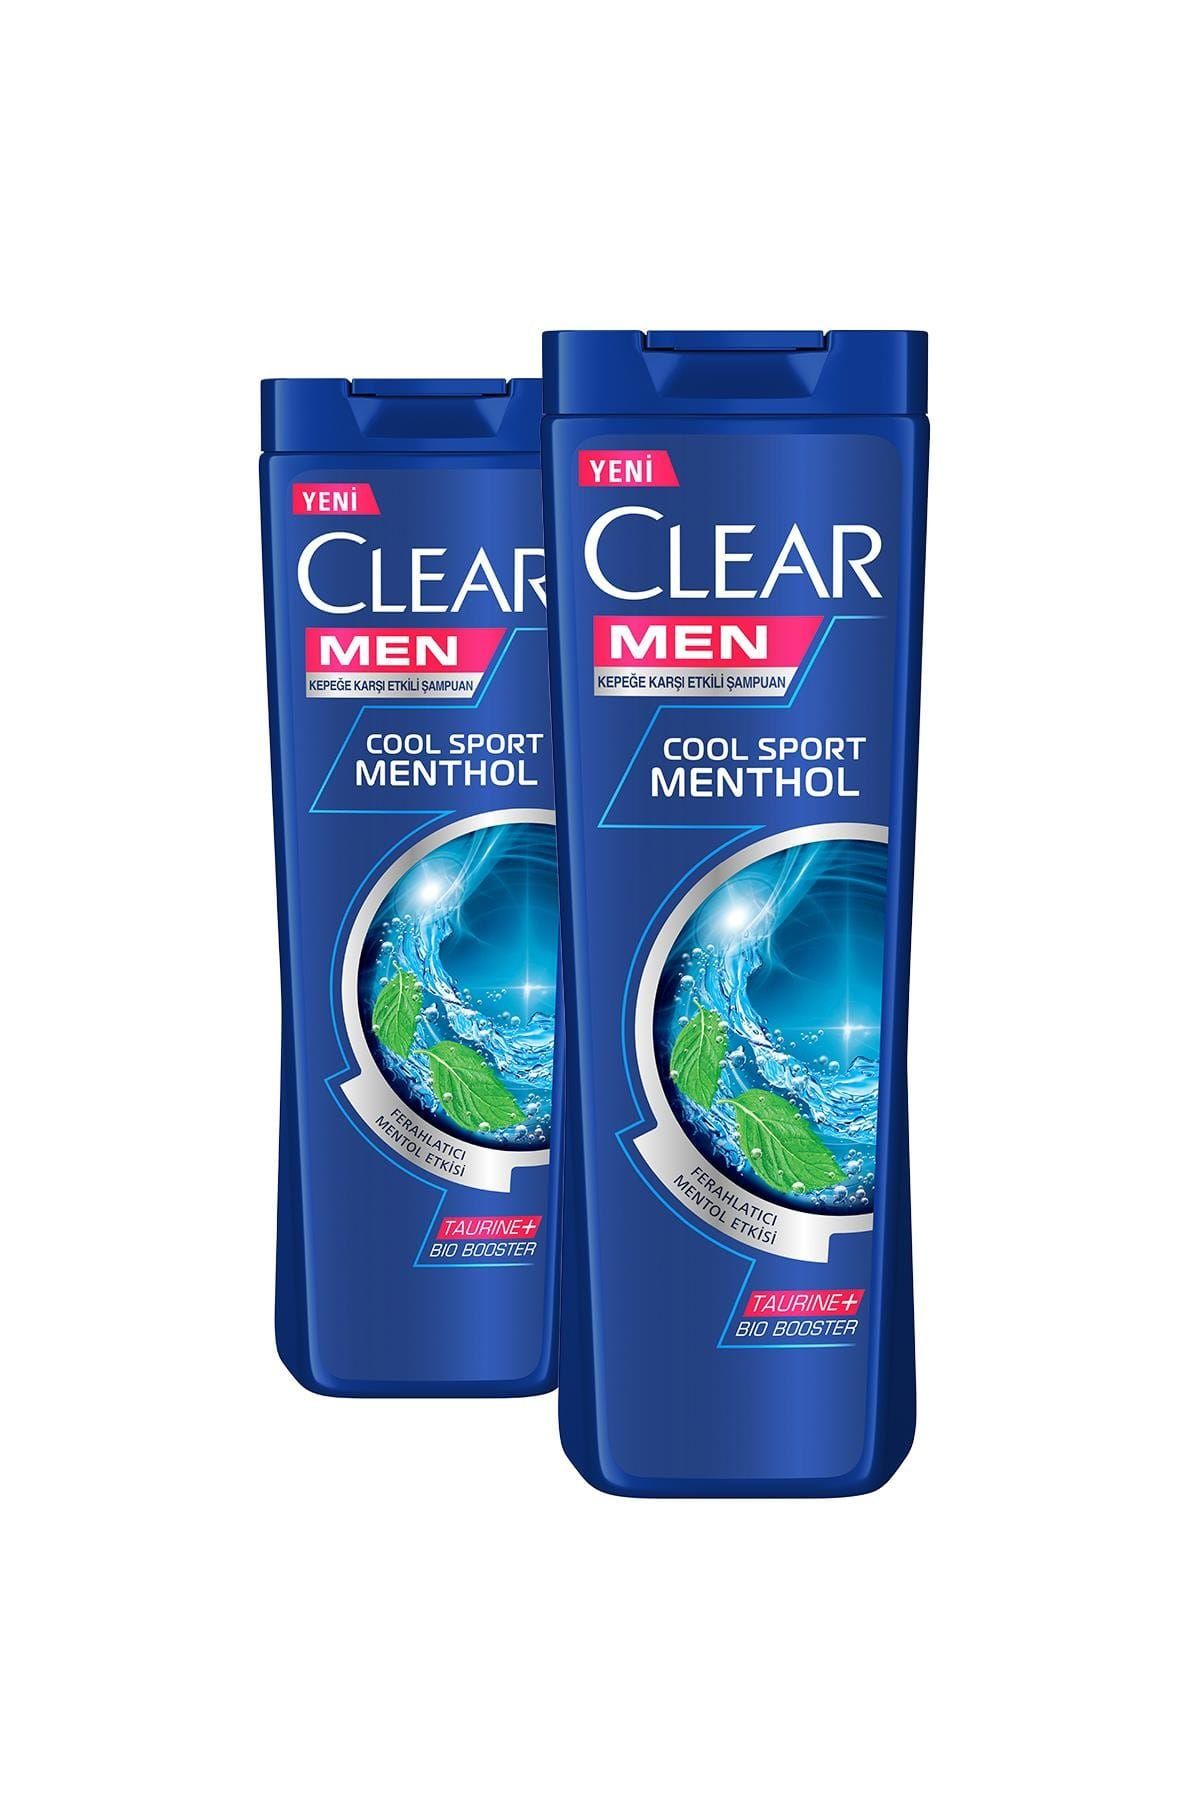 Clear Men Şampuan Cool Sport Menthol 500 ml x 2